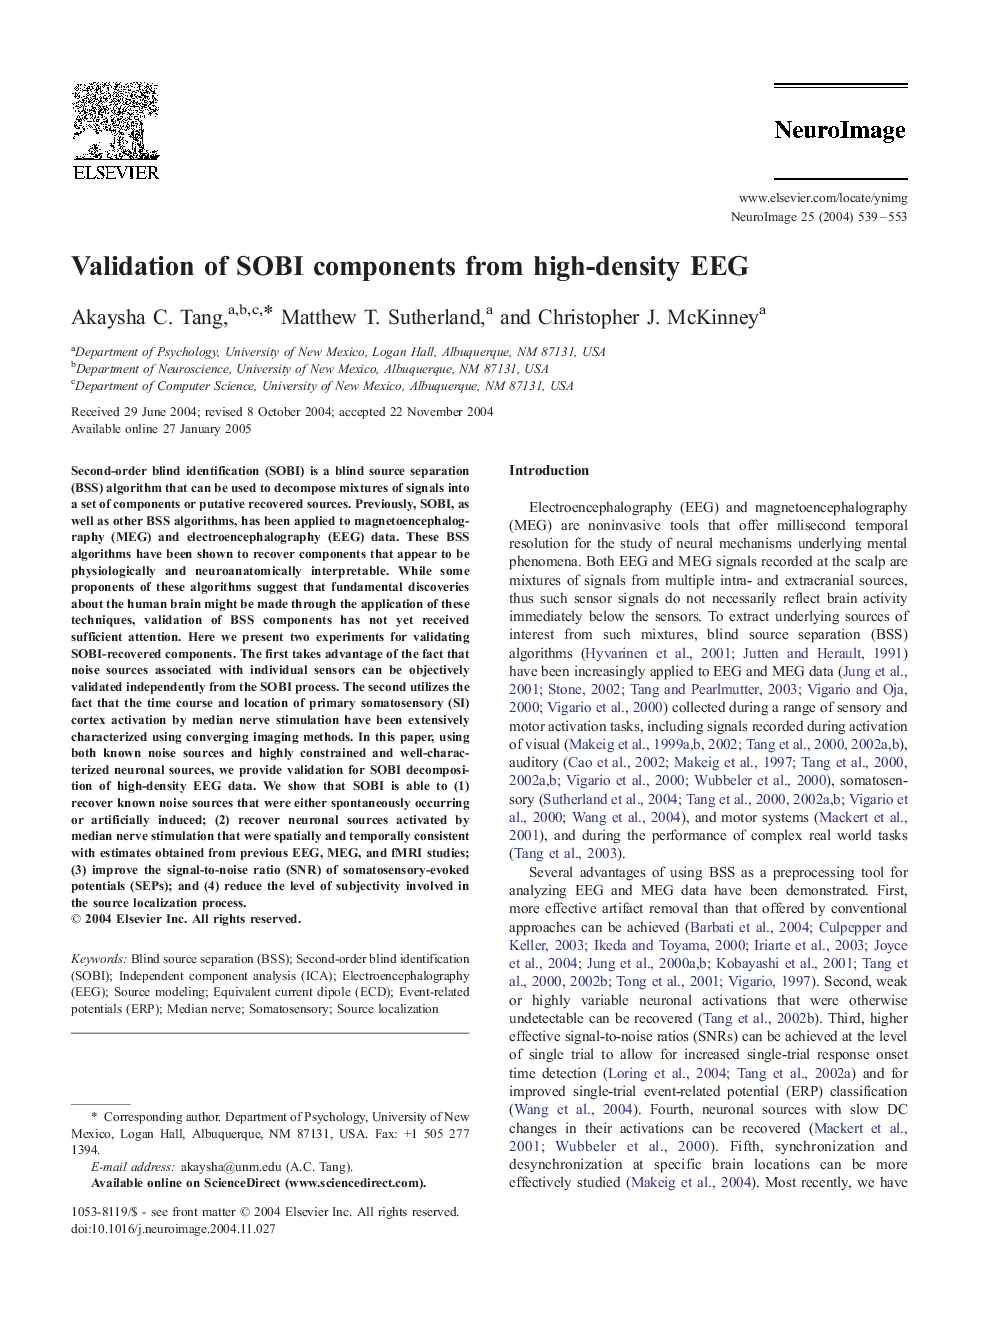 Validation of SOBI components from high-density EEG